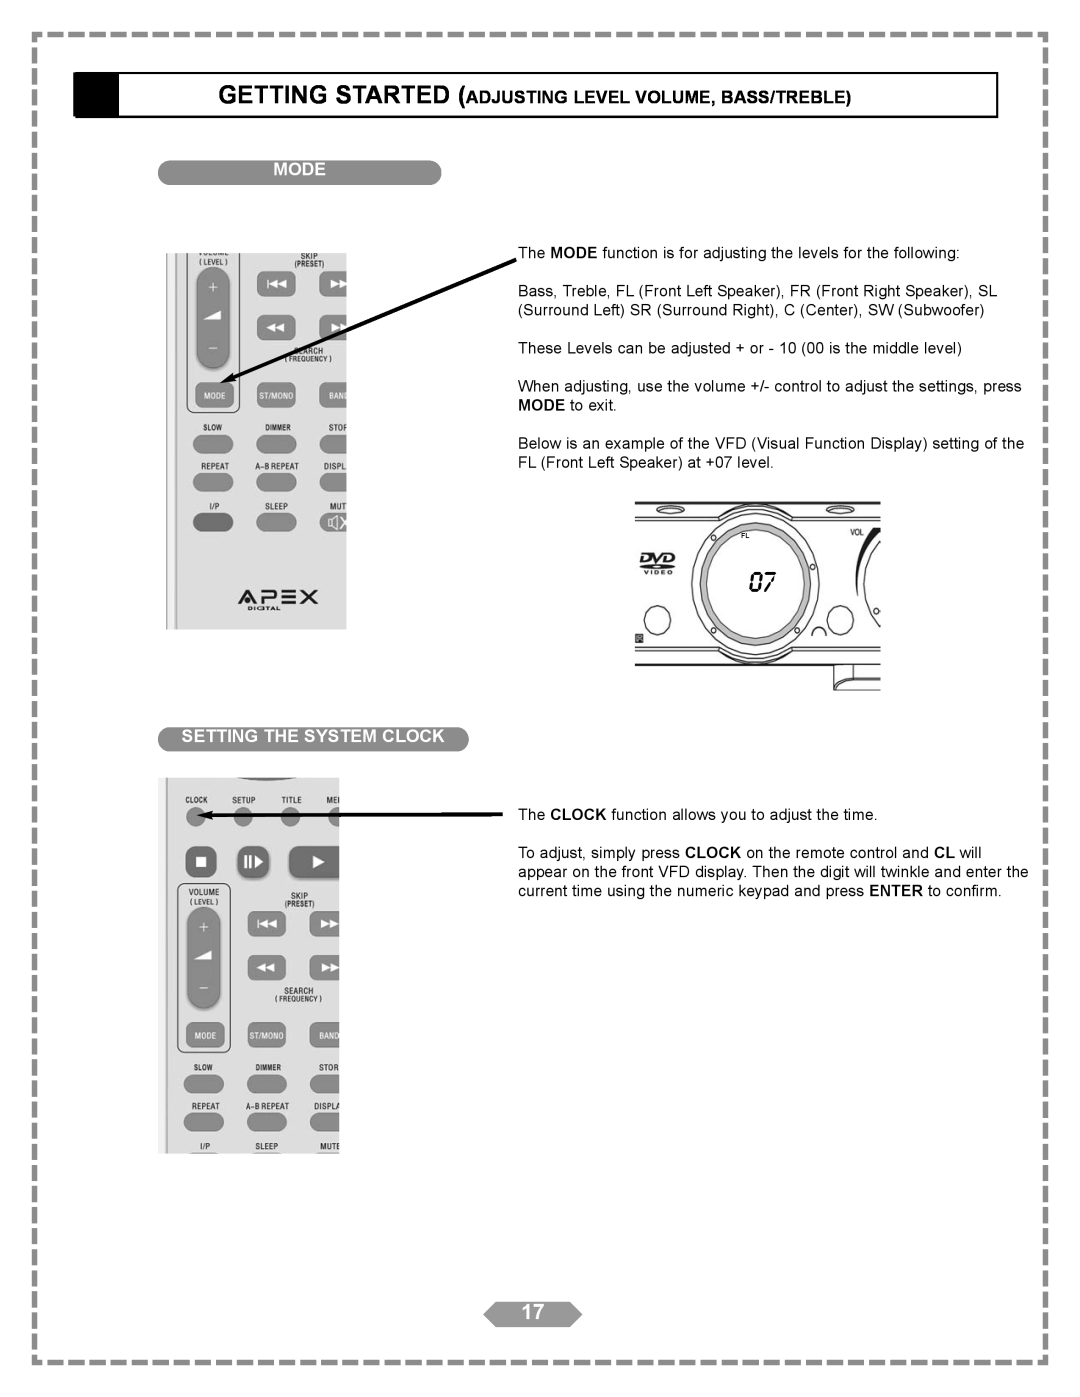 Apex Digital HT-175 manual Mode, Setting The System Clock 